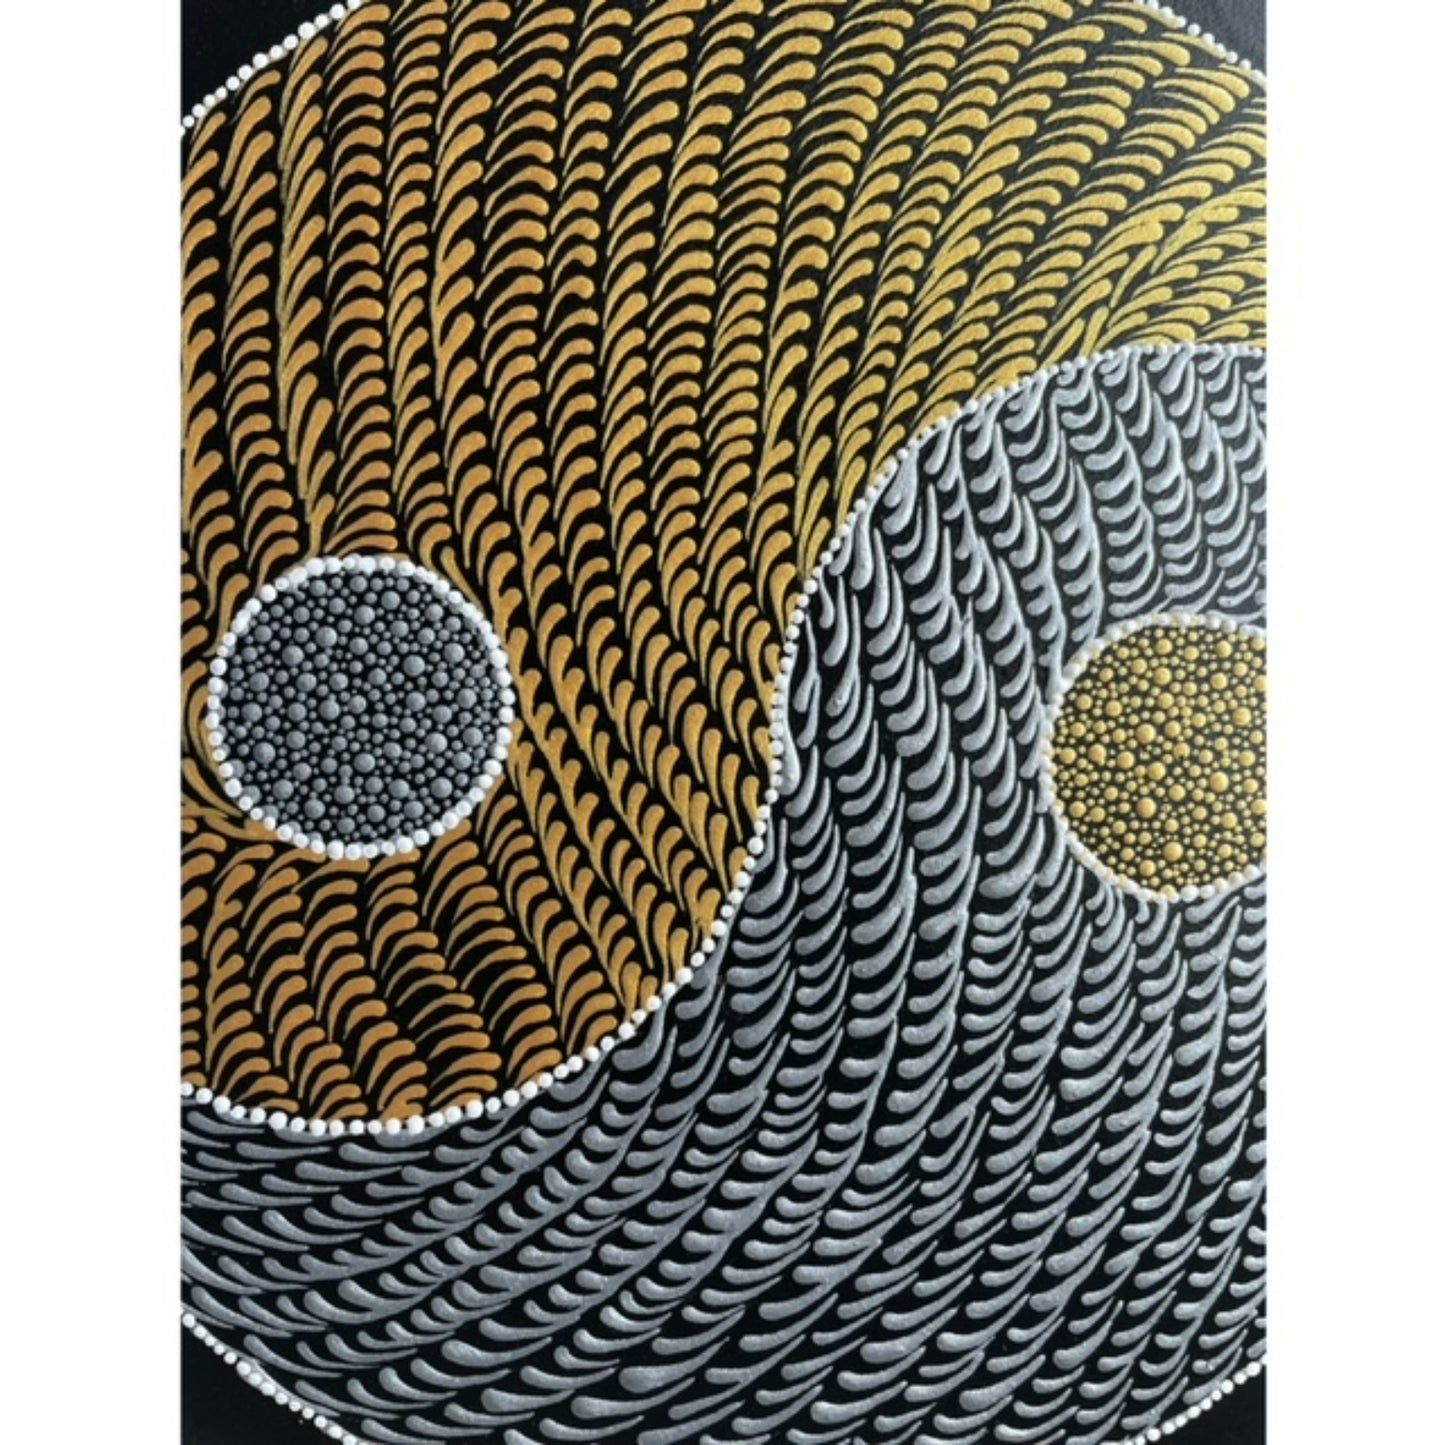 Yin Yang Waves of Life Dot Art Acrylic Paint Handmade